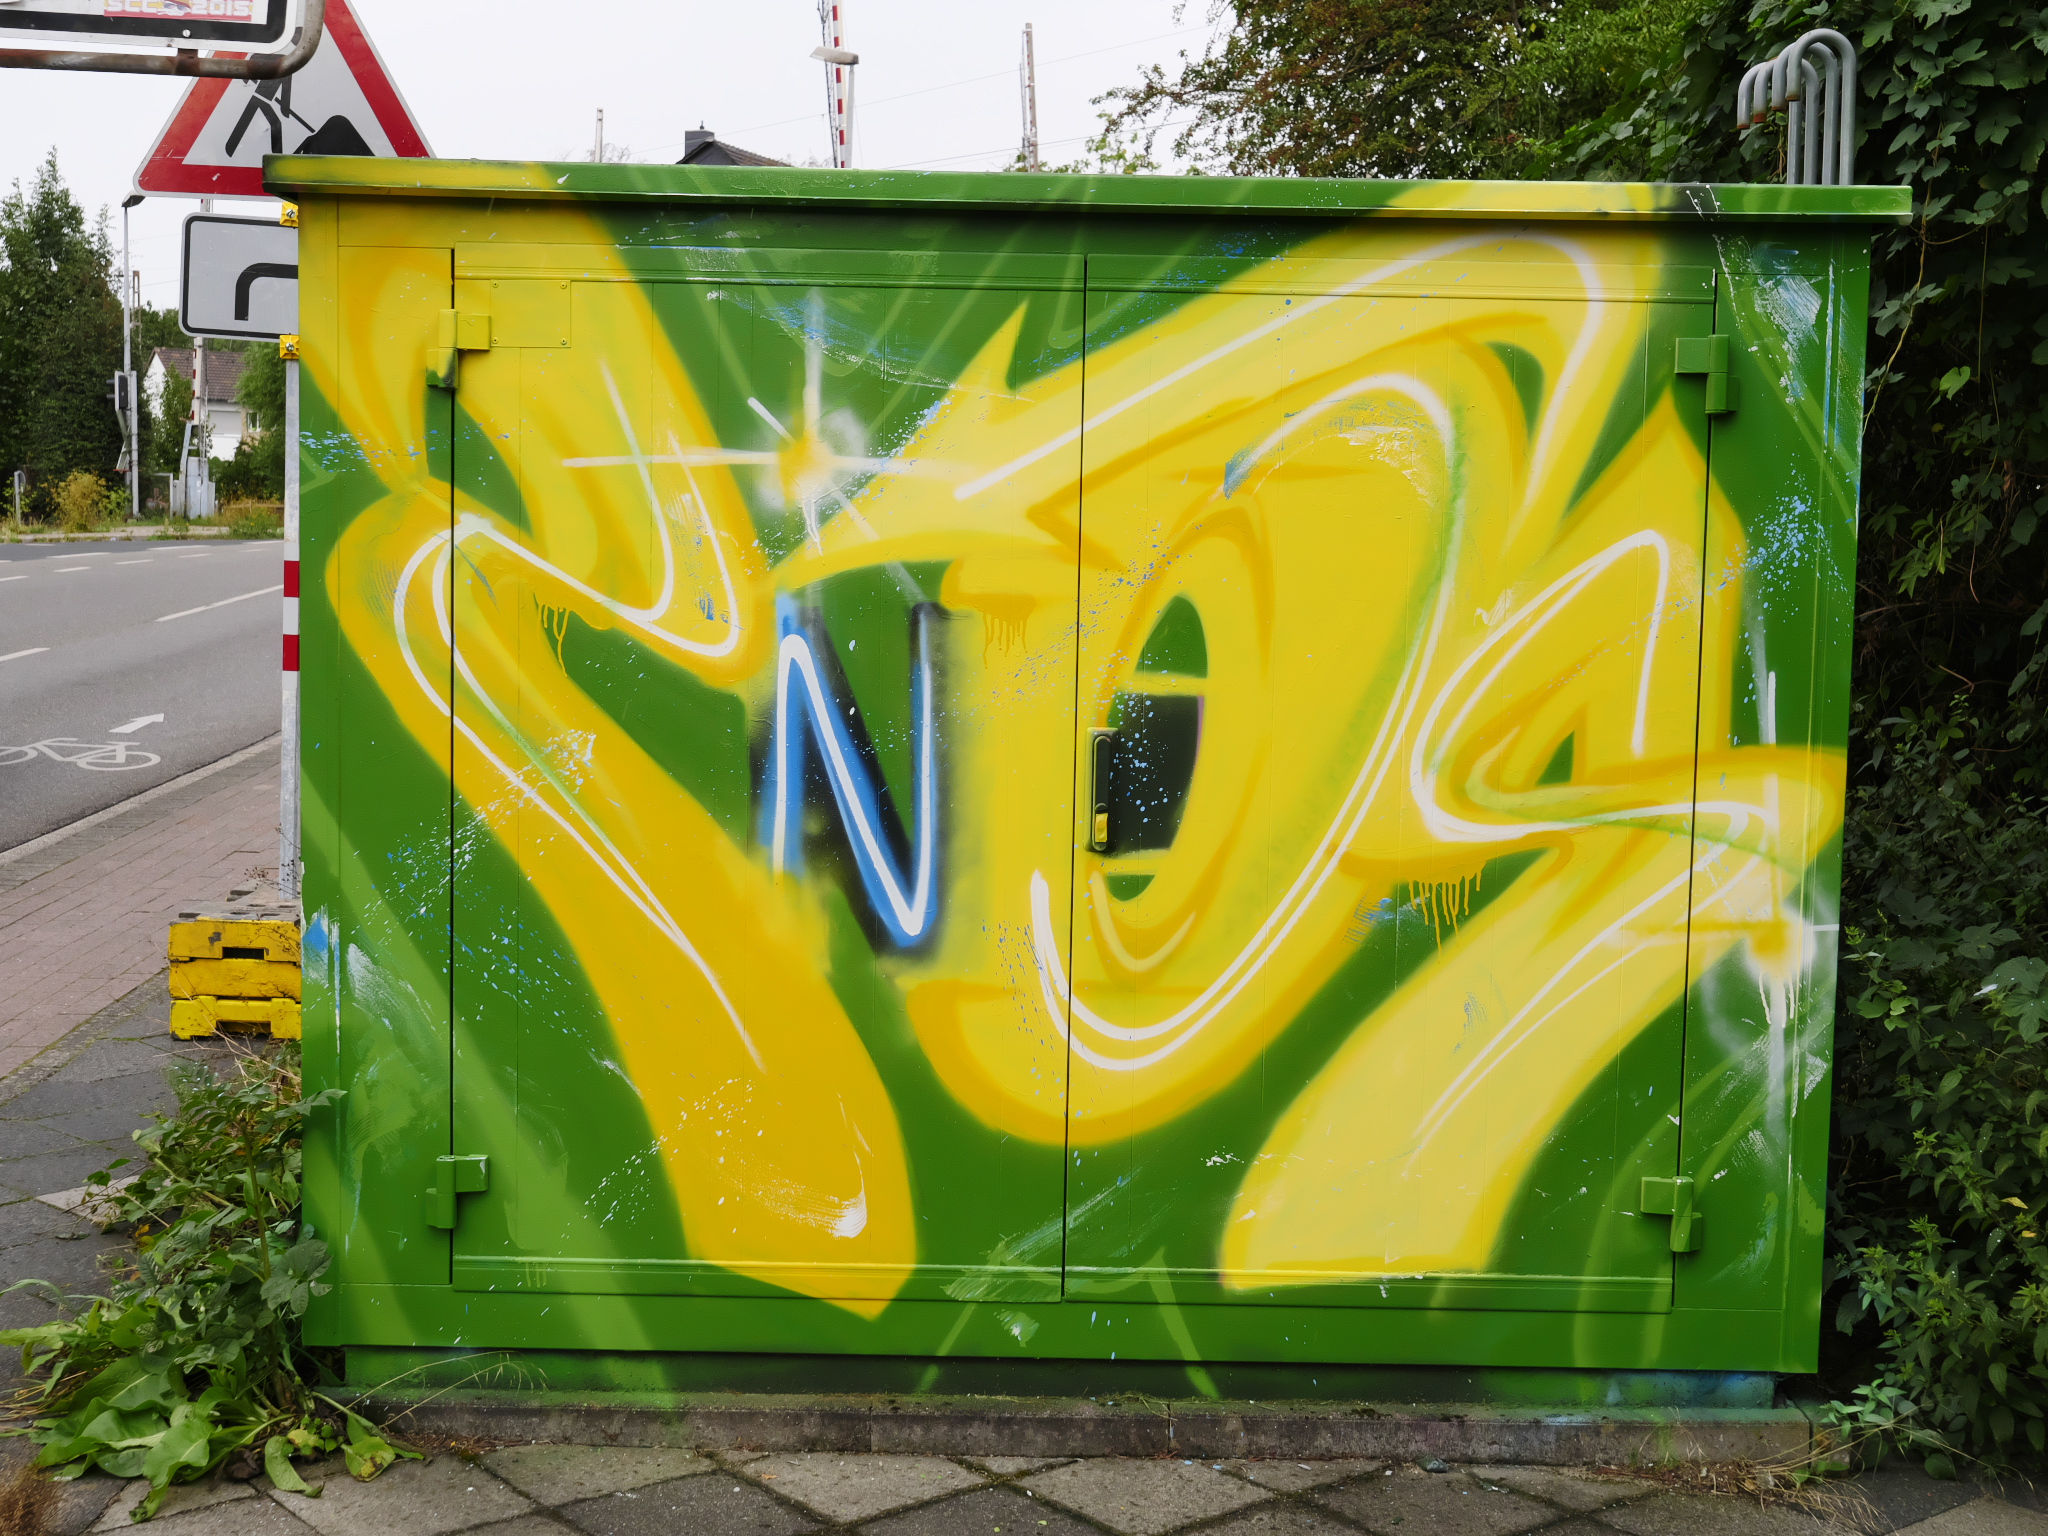 jugendkulturjahr-2020-ratingen-jkj2020-graffiti-trafohaeuschen-stadtwerke-Bild12